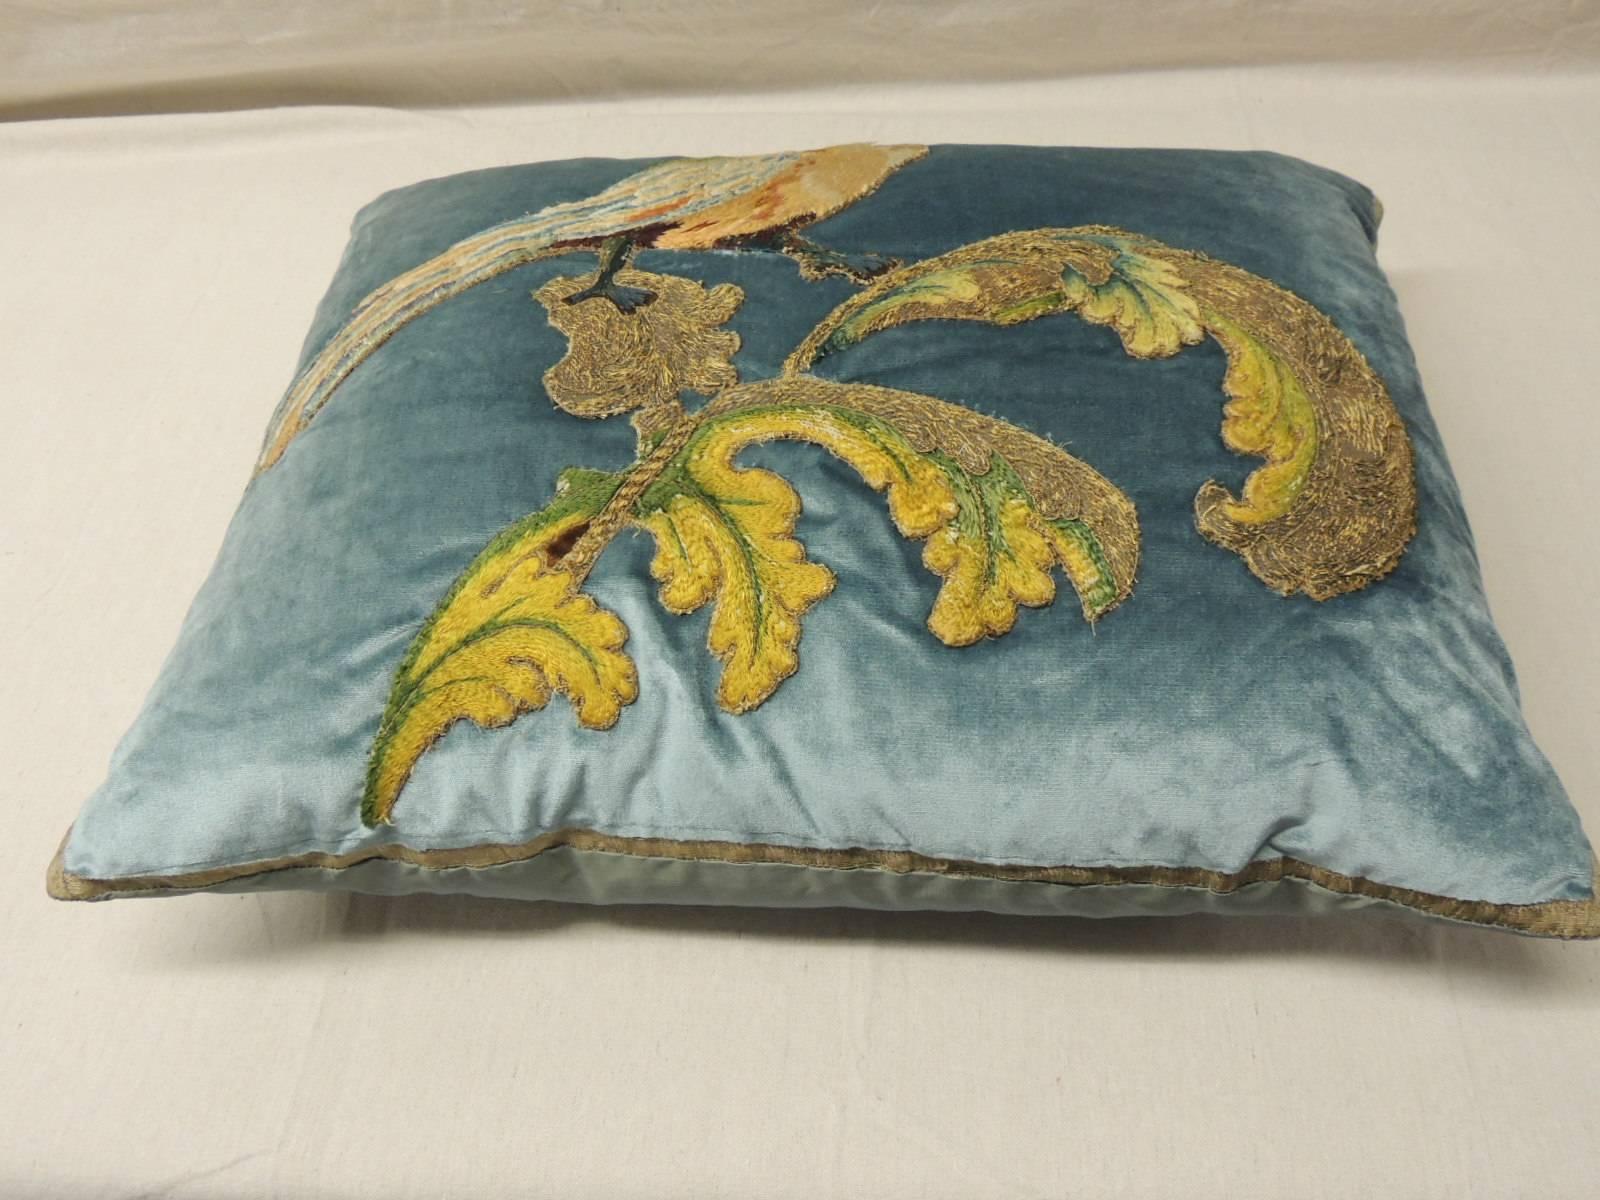 Silk velvet yellow bird applique bolster pillow, 18th century bird embroidery re-applied to 20th century silk velvet in blue. Decorative metallic antique trim around, blue silk backing.